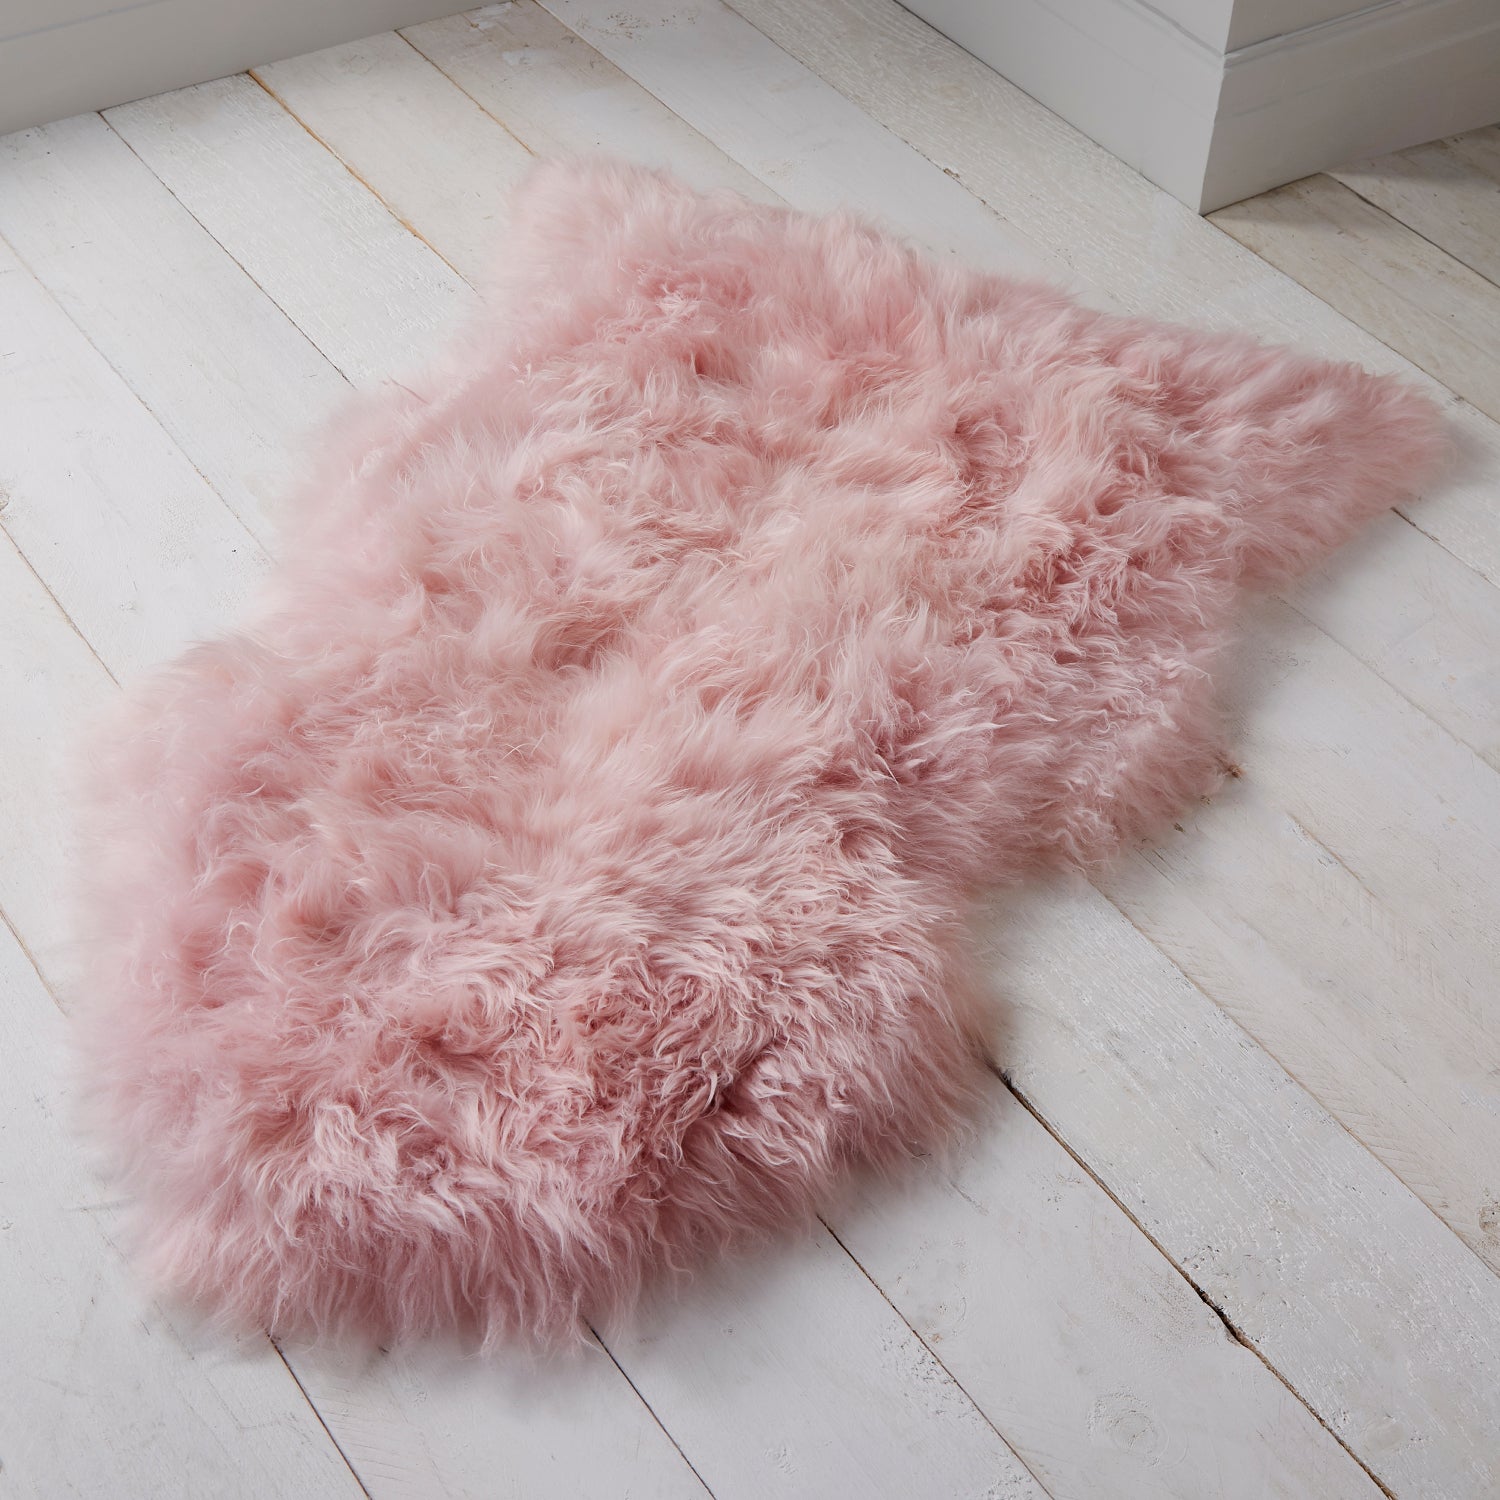 Sheepskin blush pink rug xxl by Native